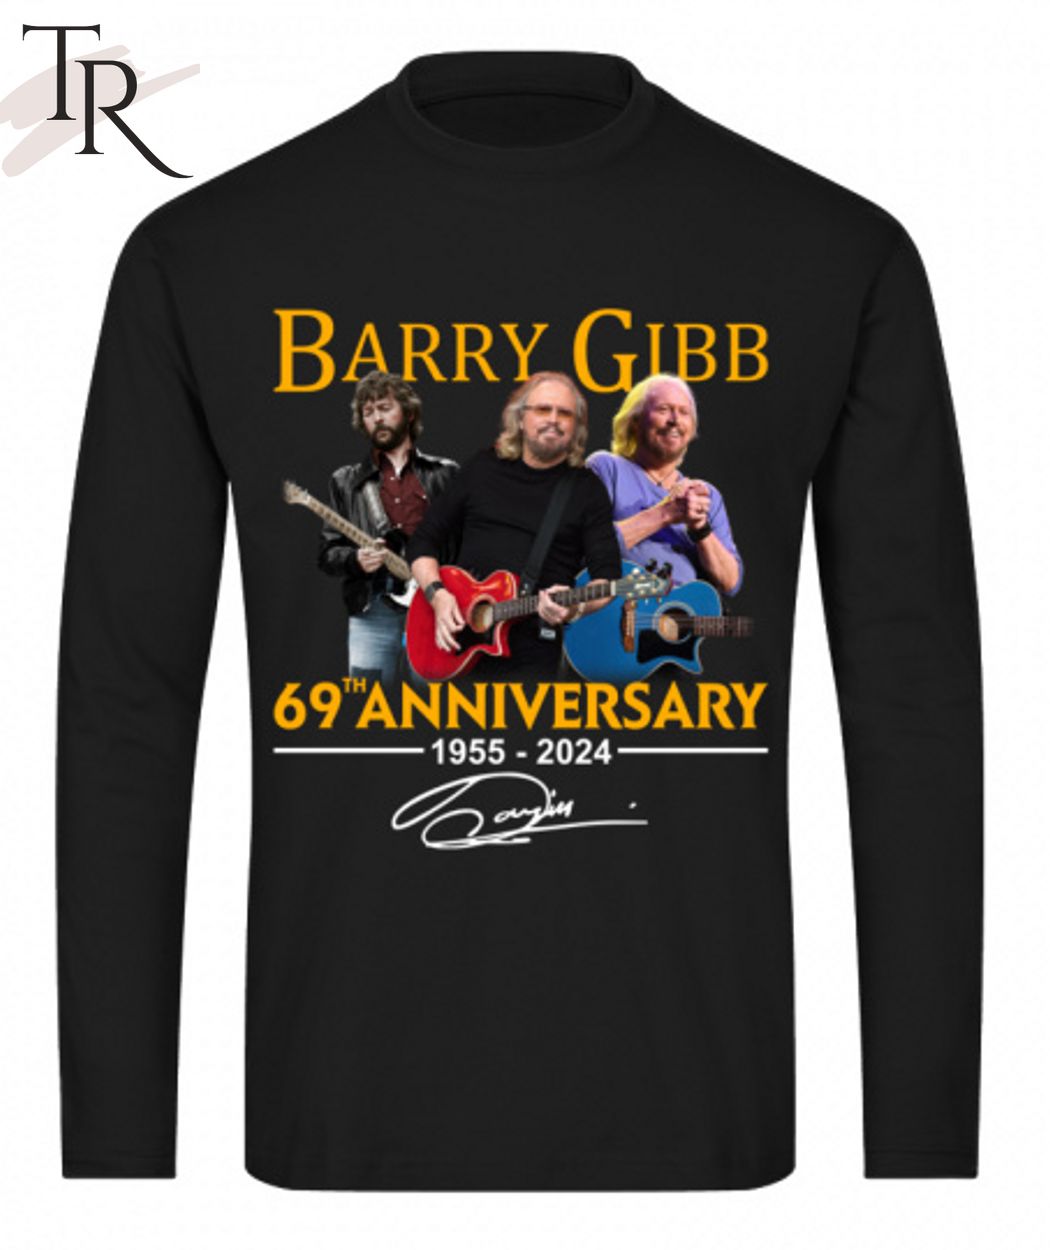 Barry Gibb 69th Anniversary 1955-2024 Signature T-Shirt